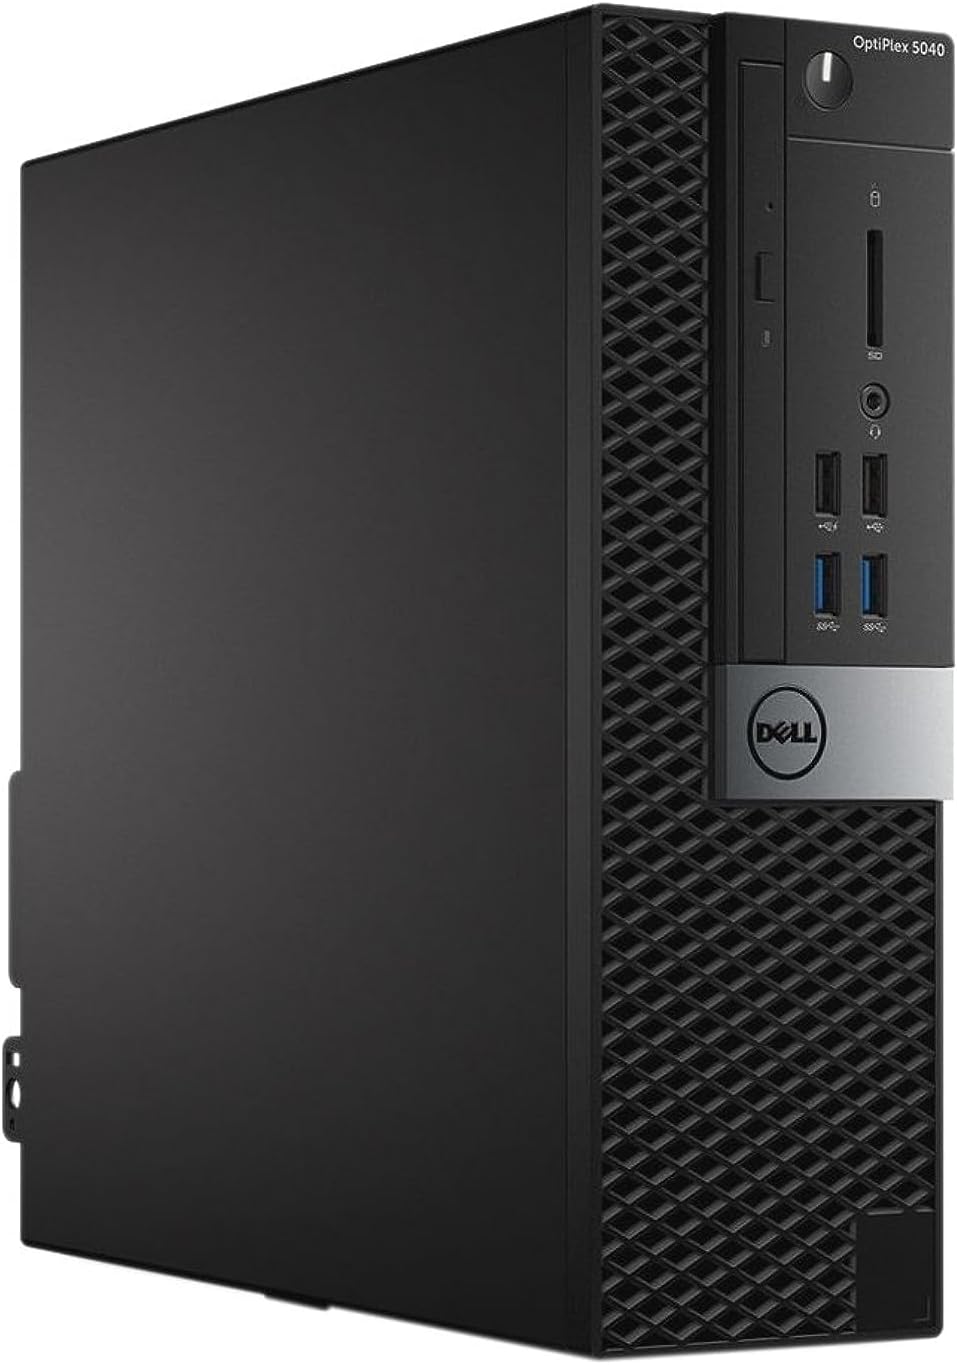 Dell OptiPlex 5040 PC Tower, Intel Core i5-6300U, 500GB HDD, 8GB RAM, Intel HD Graphics, DOS- Black